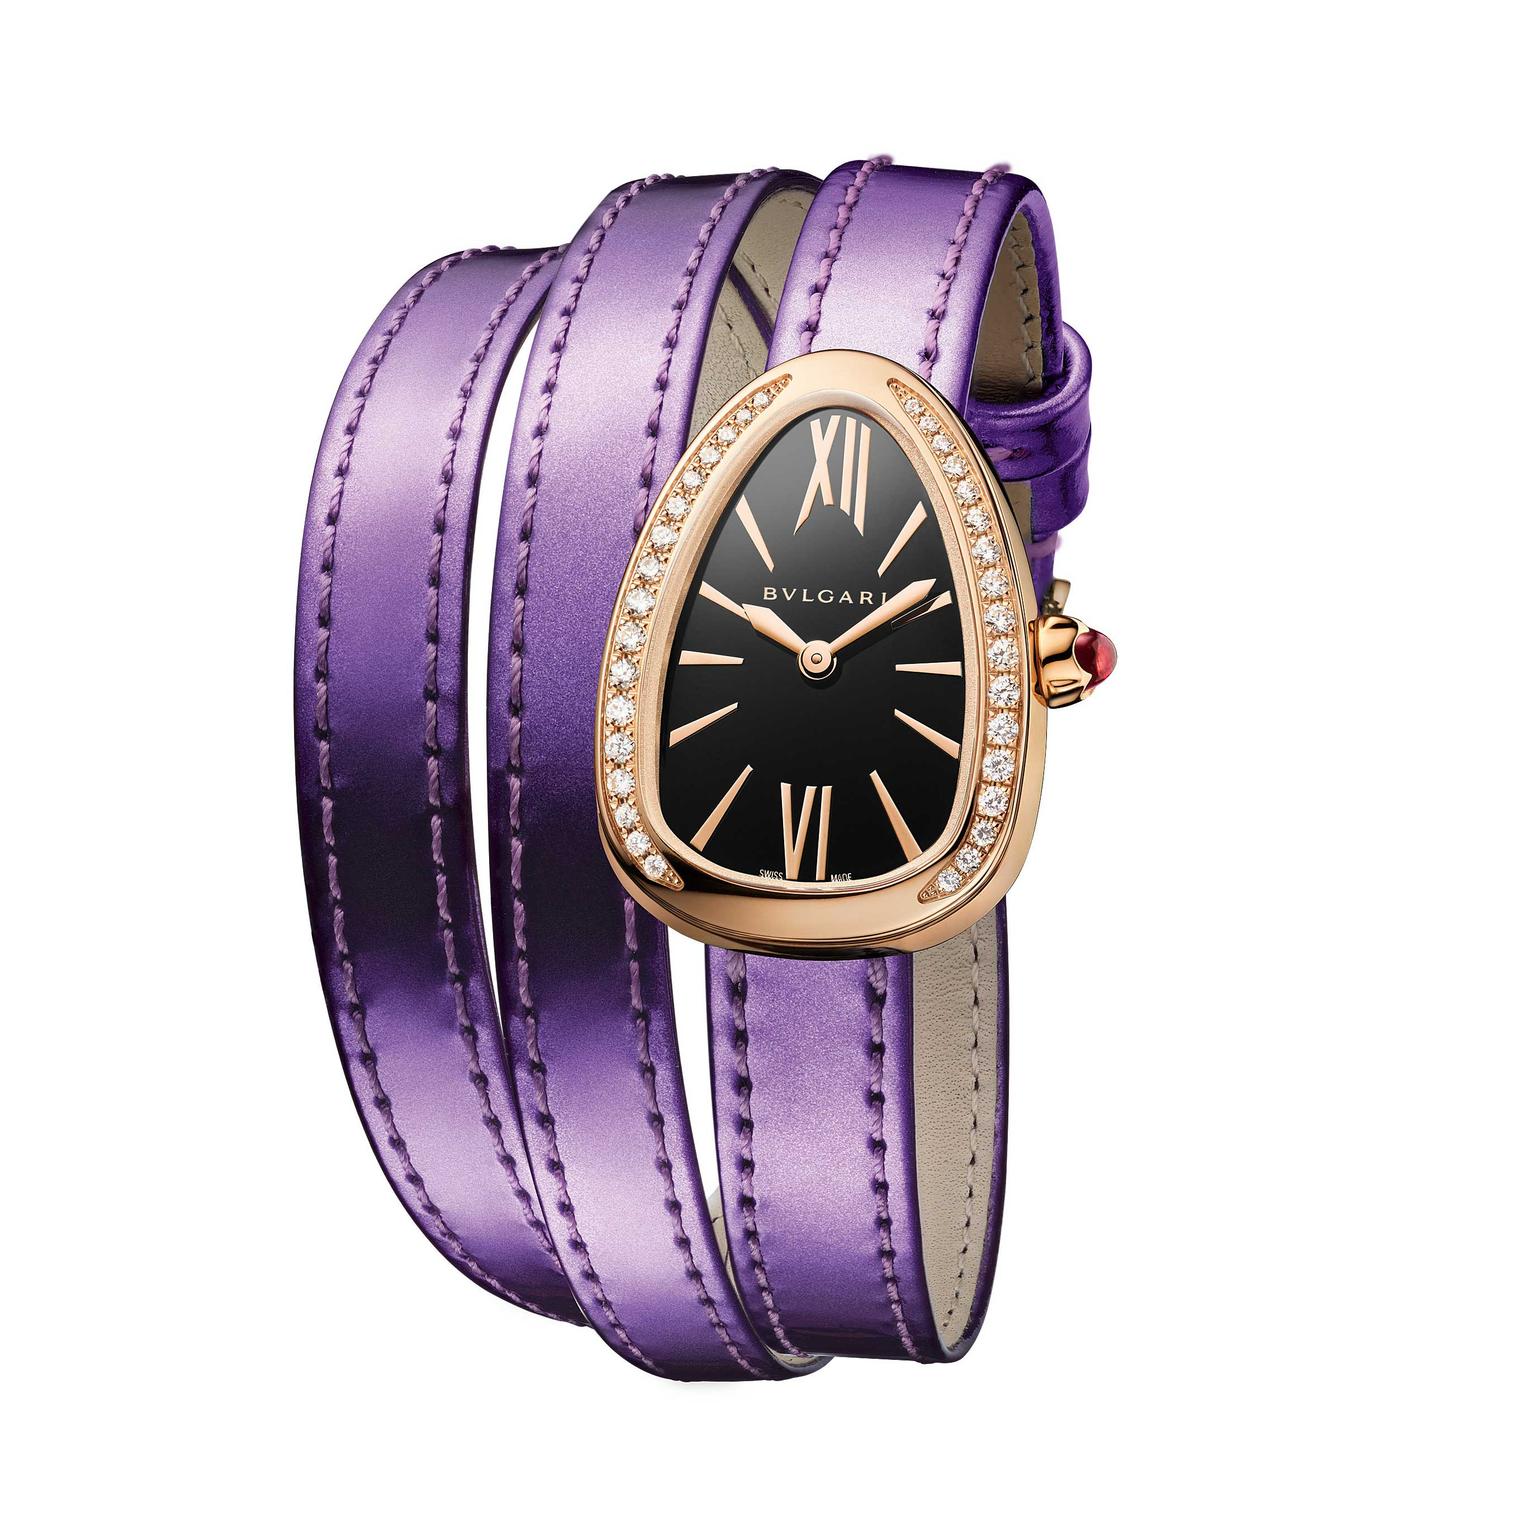 Bulgari-Serpenti-Twist-Your-Time-gold-ladies-watch-on-metallic-purple-strap